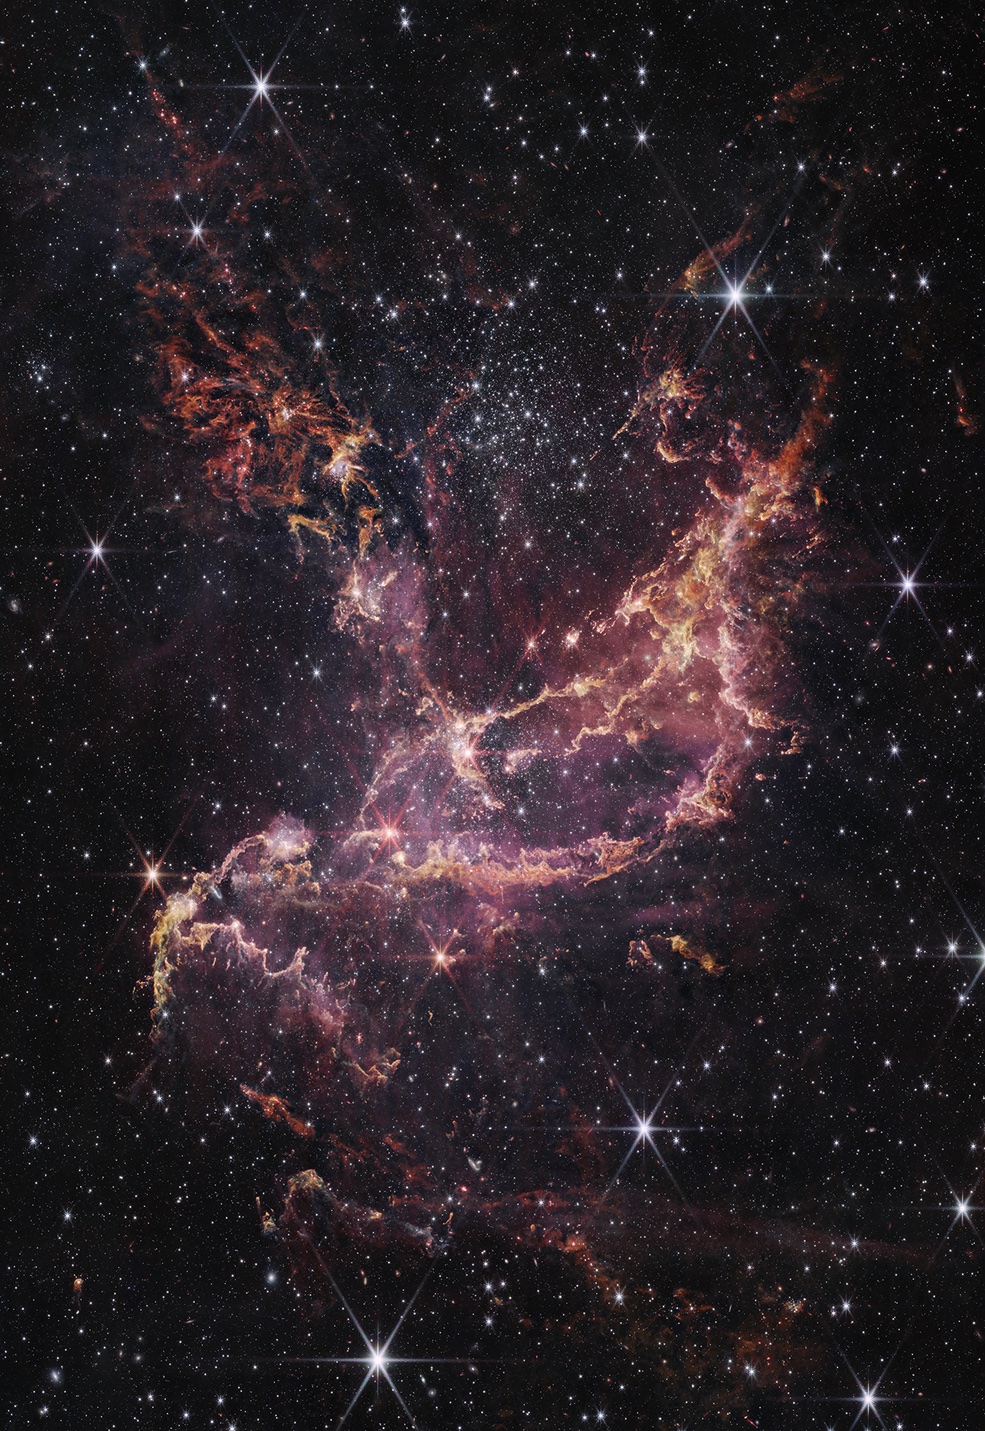 Webb's groundbreaking image of the star-forming region known as NGC 346, located 200,000 light years from Earth. (Credits: NASA, ESA, CSA, O. Jones (UK ATC), G. De Marchi (ESTEC), and M. Meixner (USRA). Image processing: A. Pagan (STScI), N. Habel (USRA), L. Lenkic (USRA) and L. Chu (NASA/Ames))